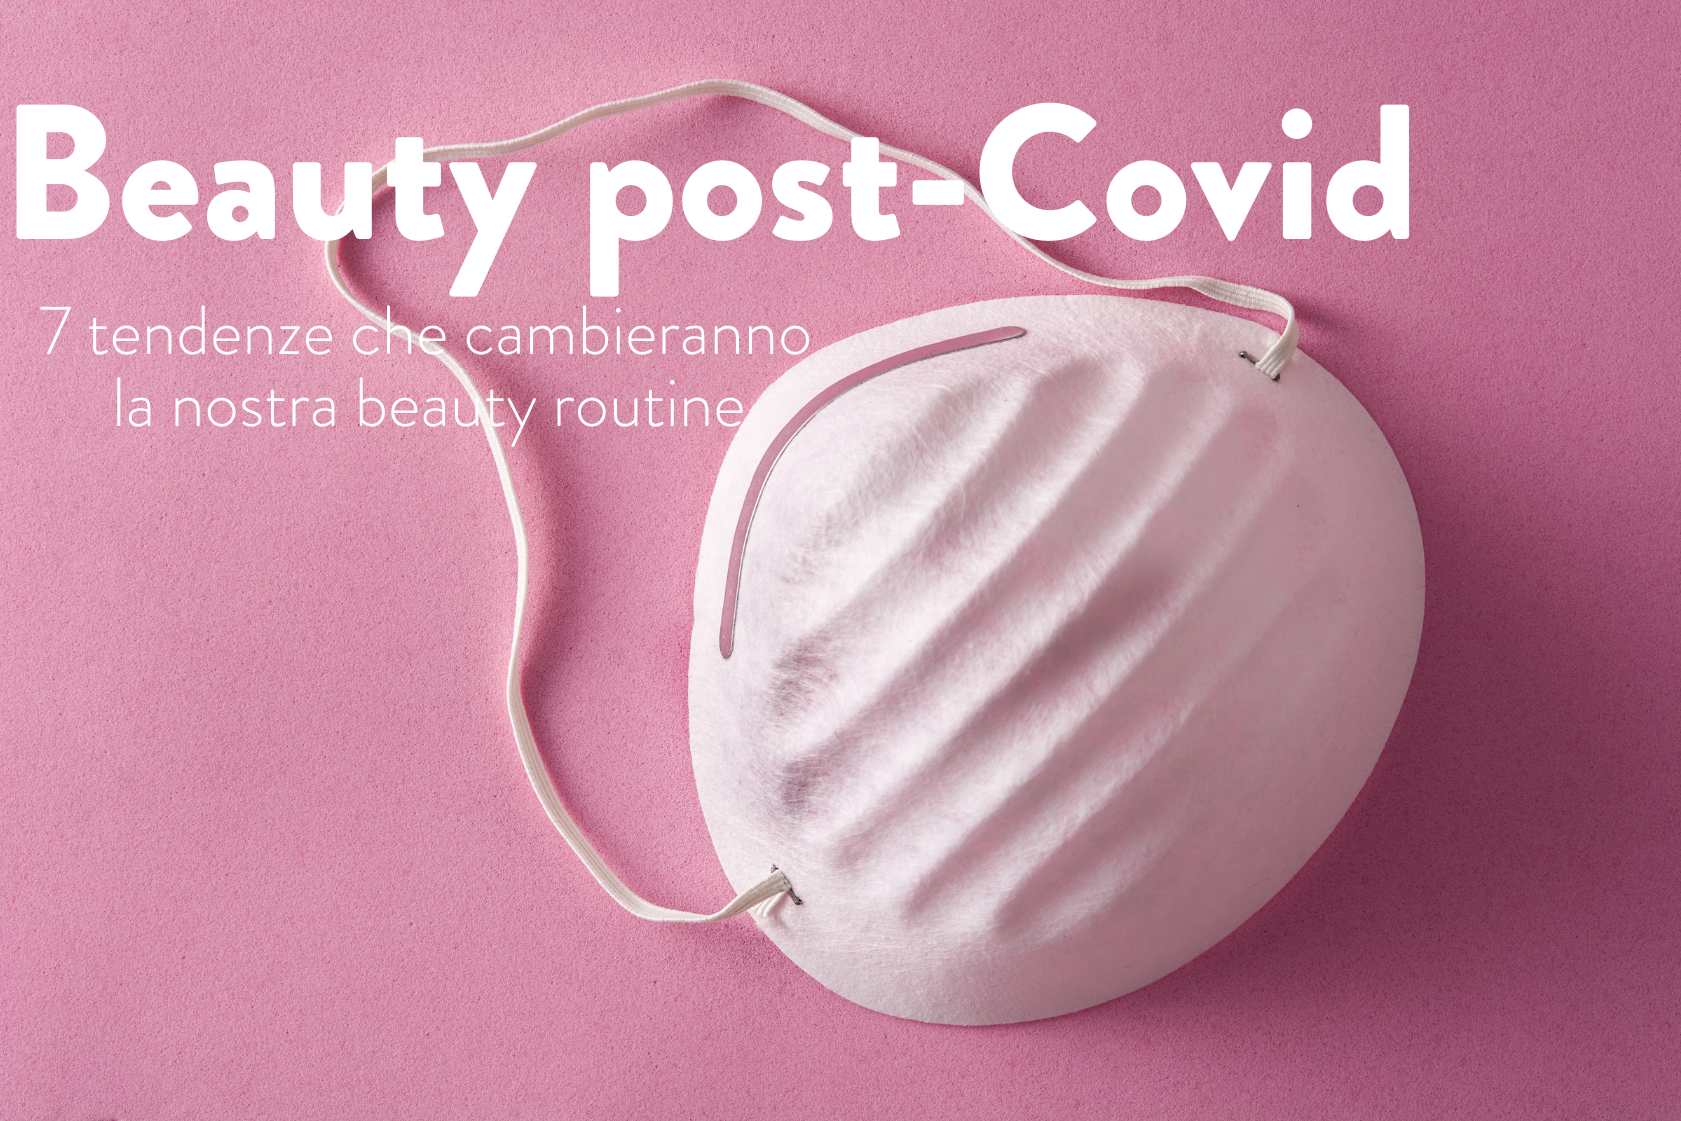 Beauty post Covid-19: sette nuove tendenze svelate da Mintel